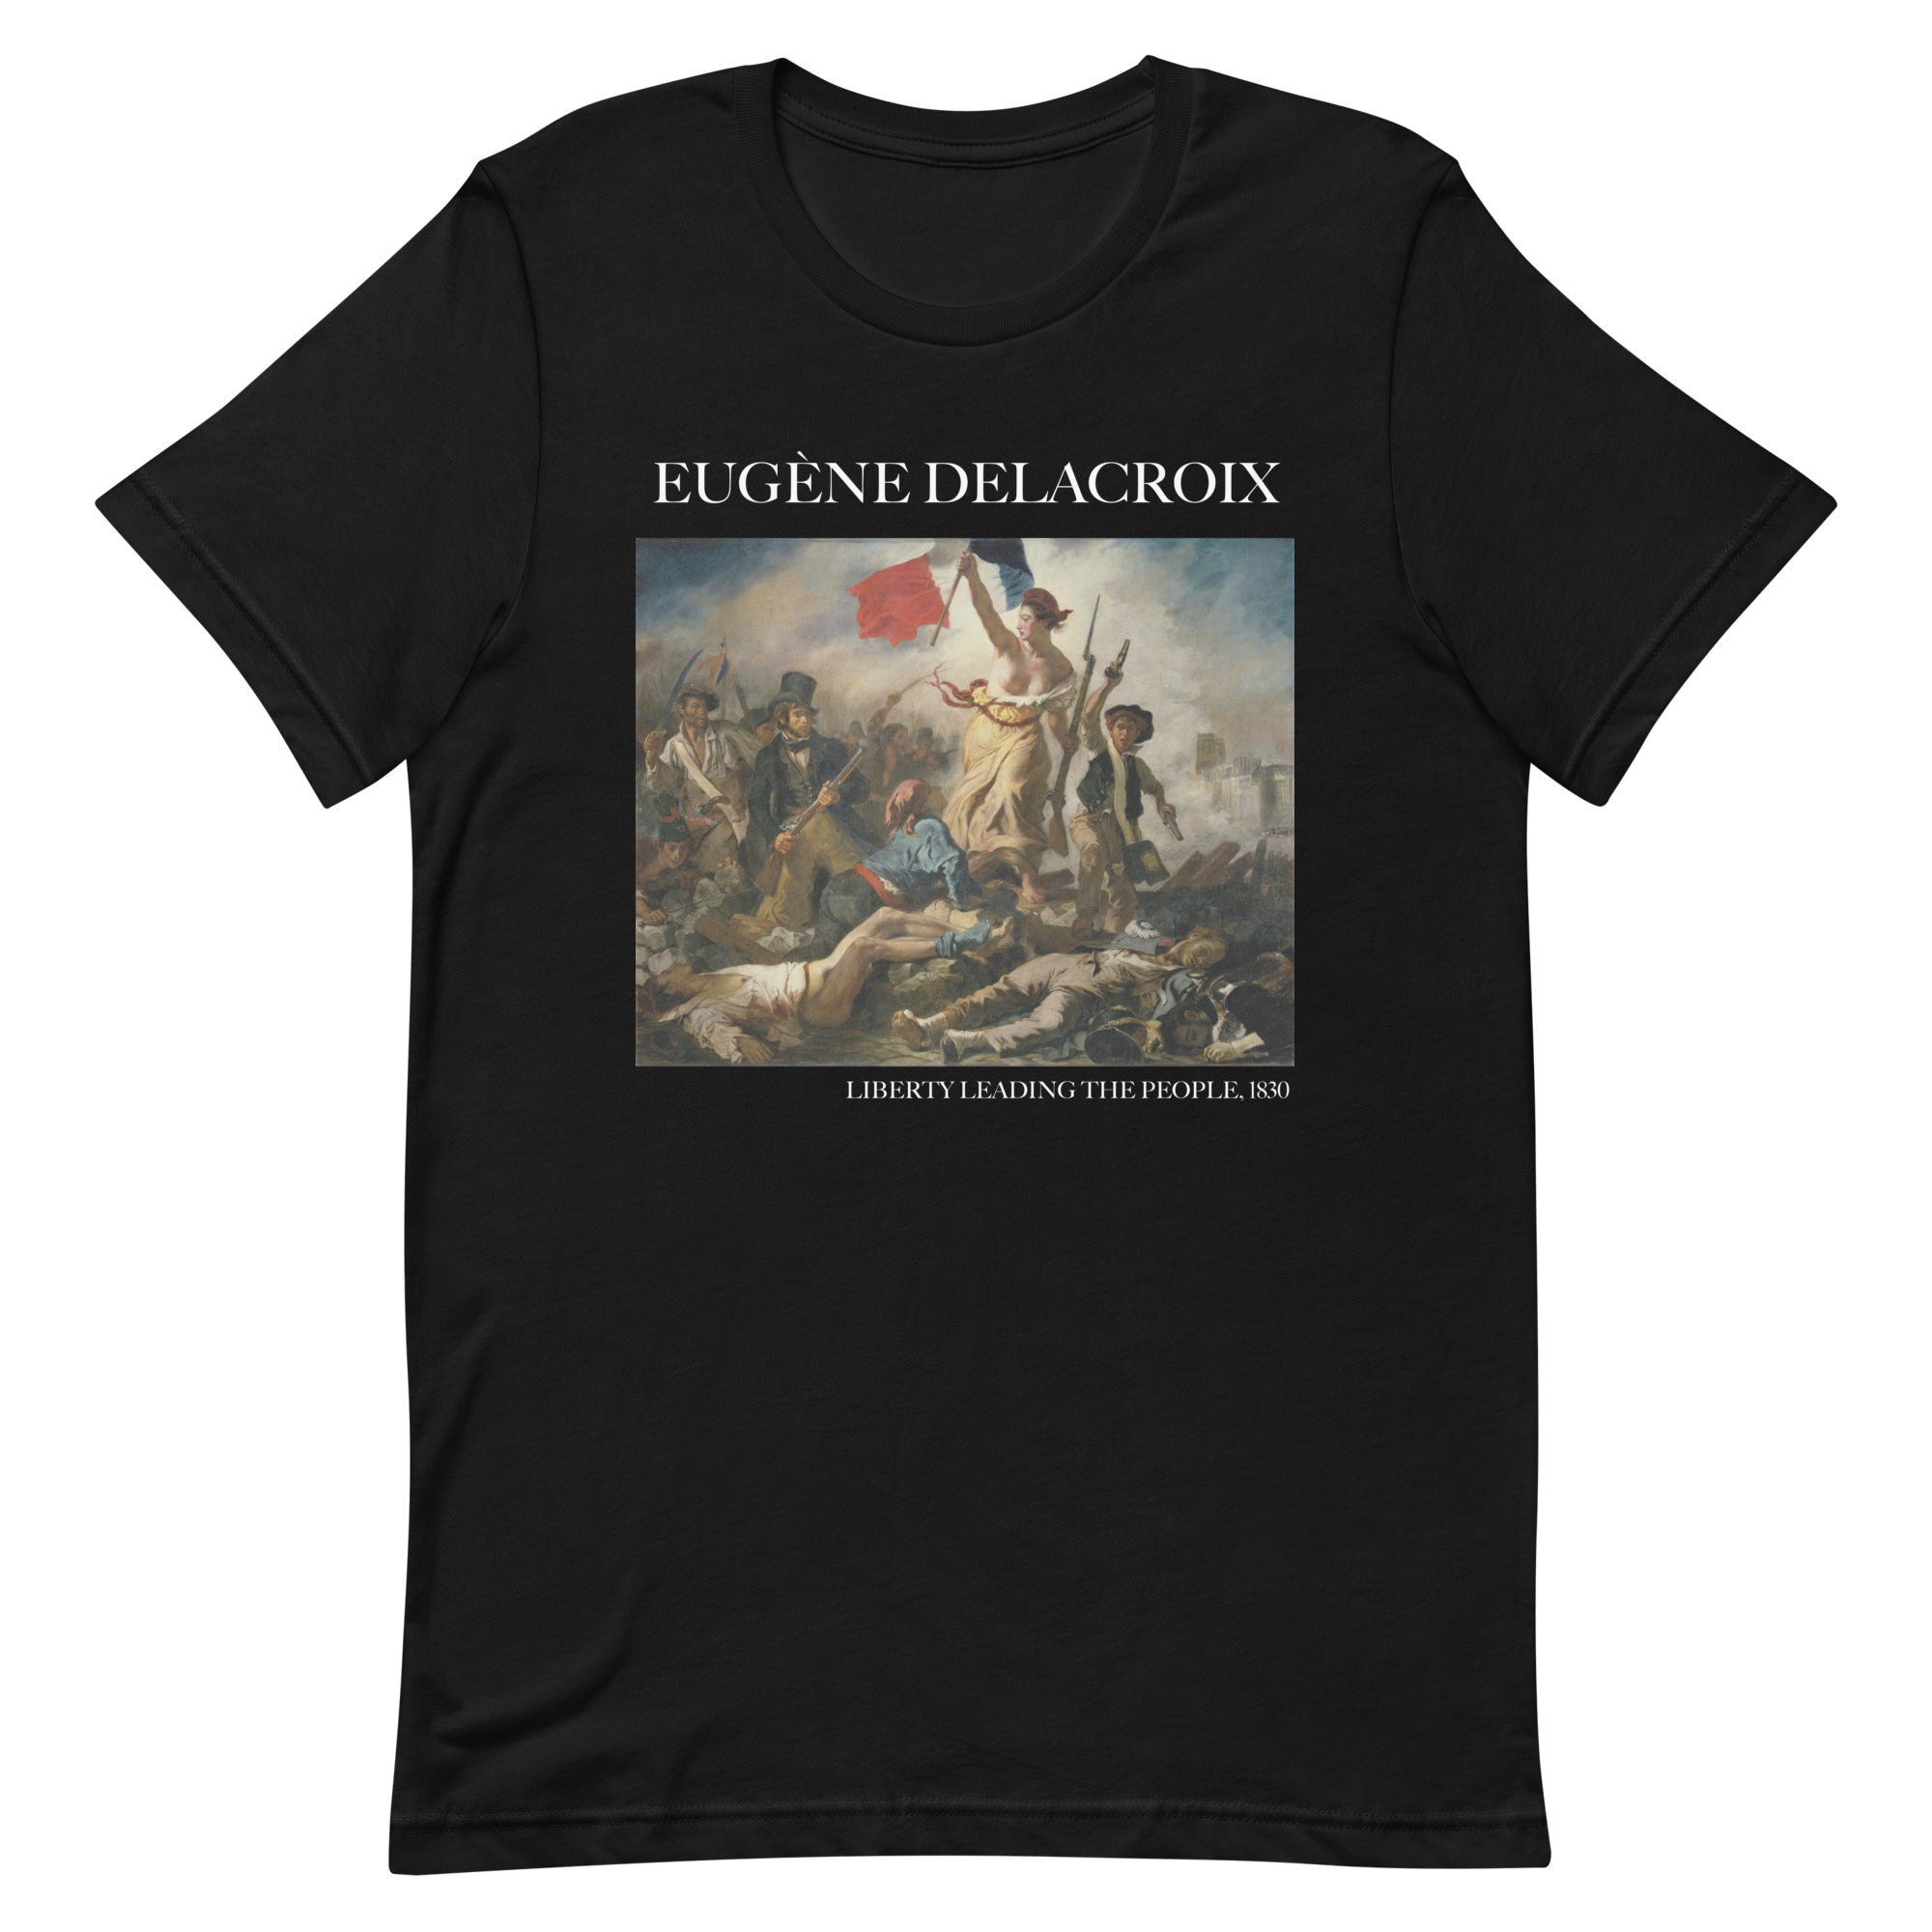 Eugène Delacroix 'Liberty Leading the People' Famous Painting T-Shirt | Unisex Classic Art Tee